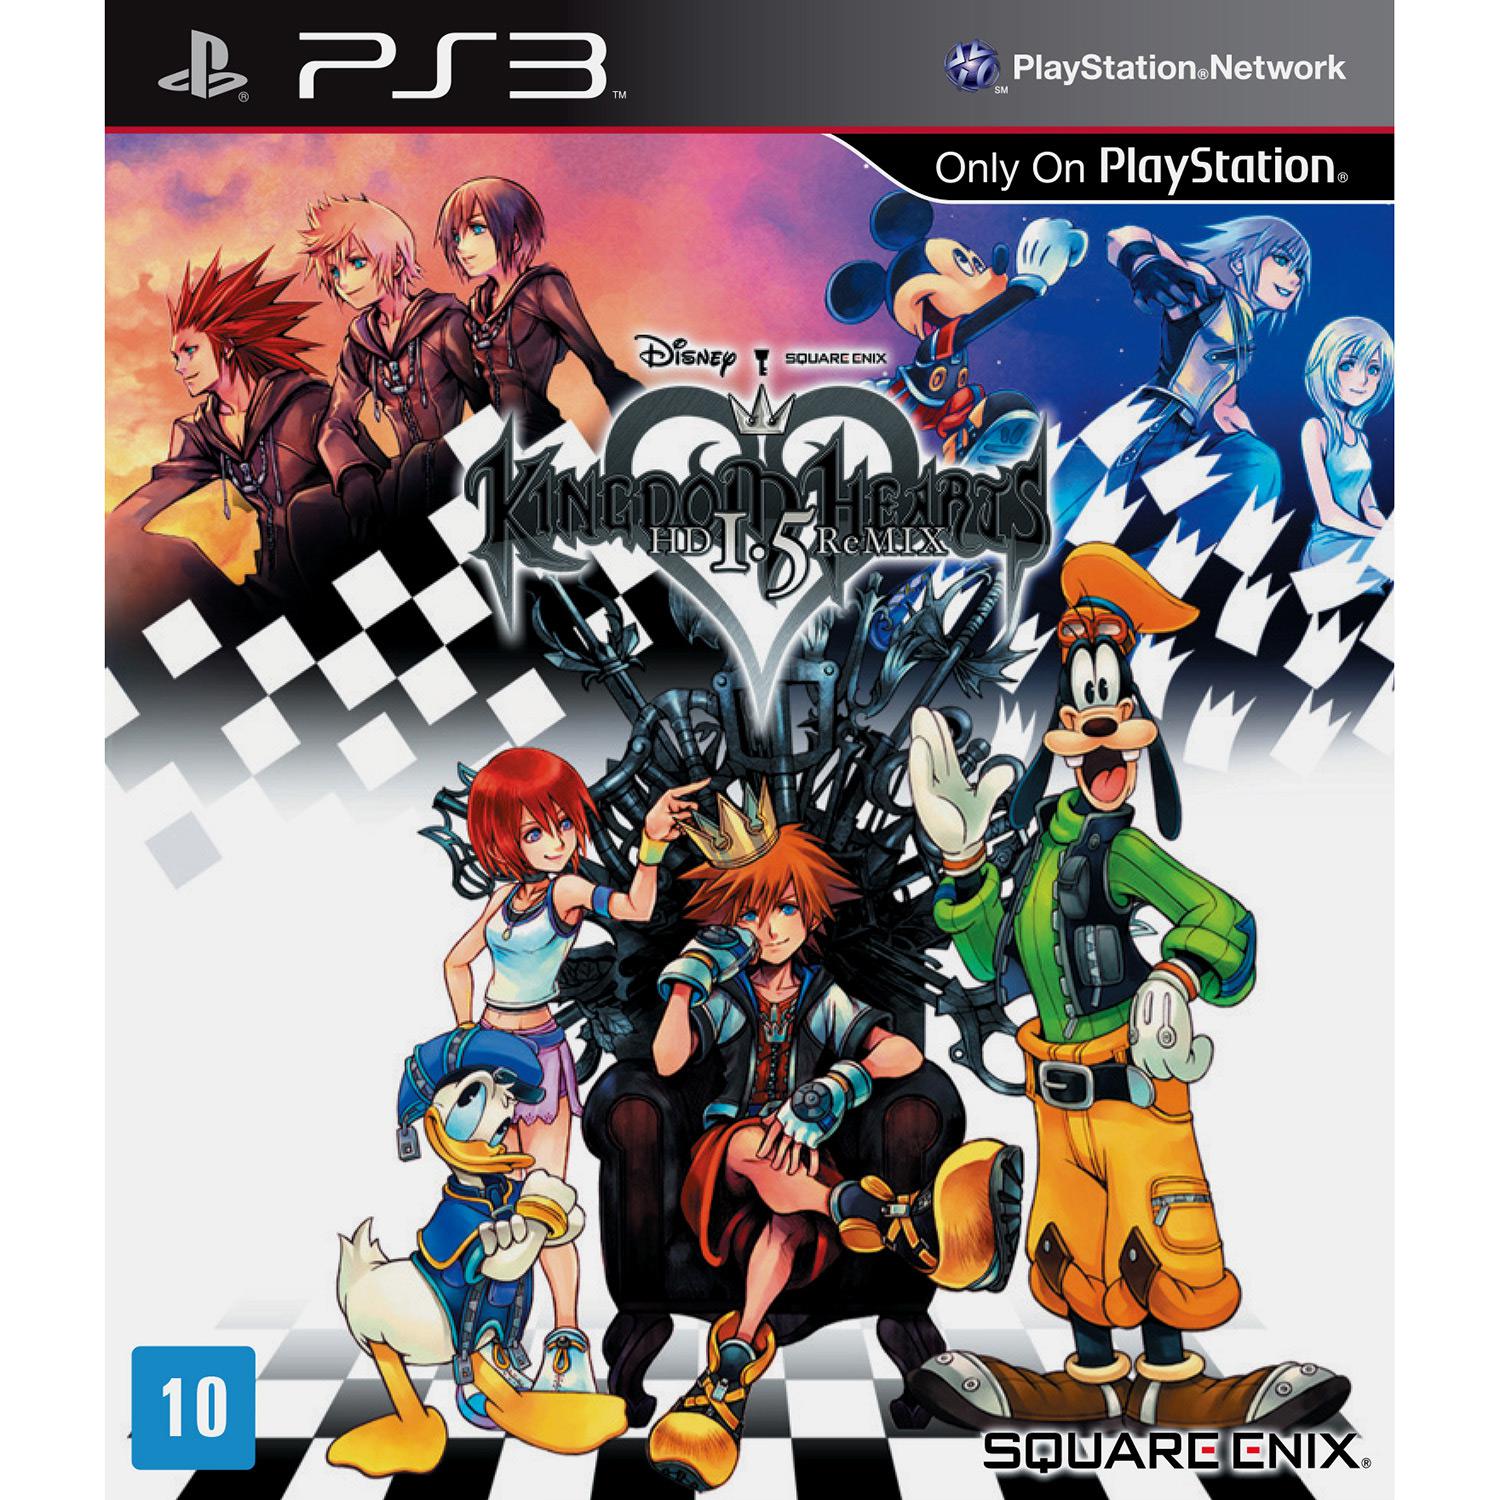 Game - Kingdom Hearts Hd 1.5 Remix - PS3 é bom? Vale a pena?